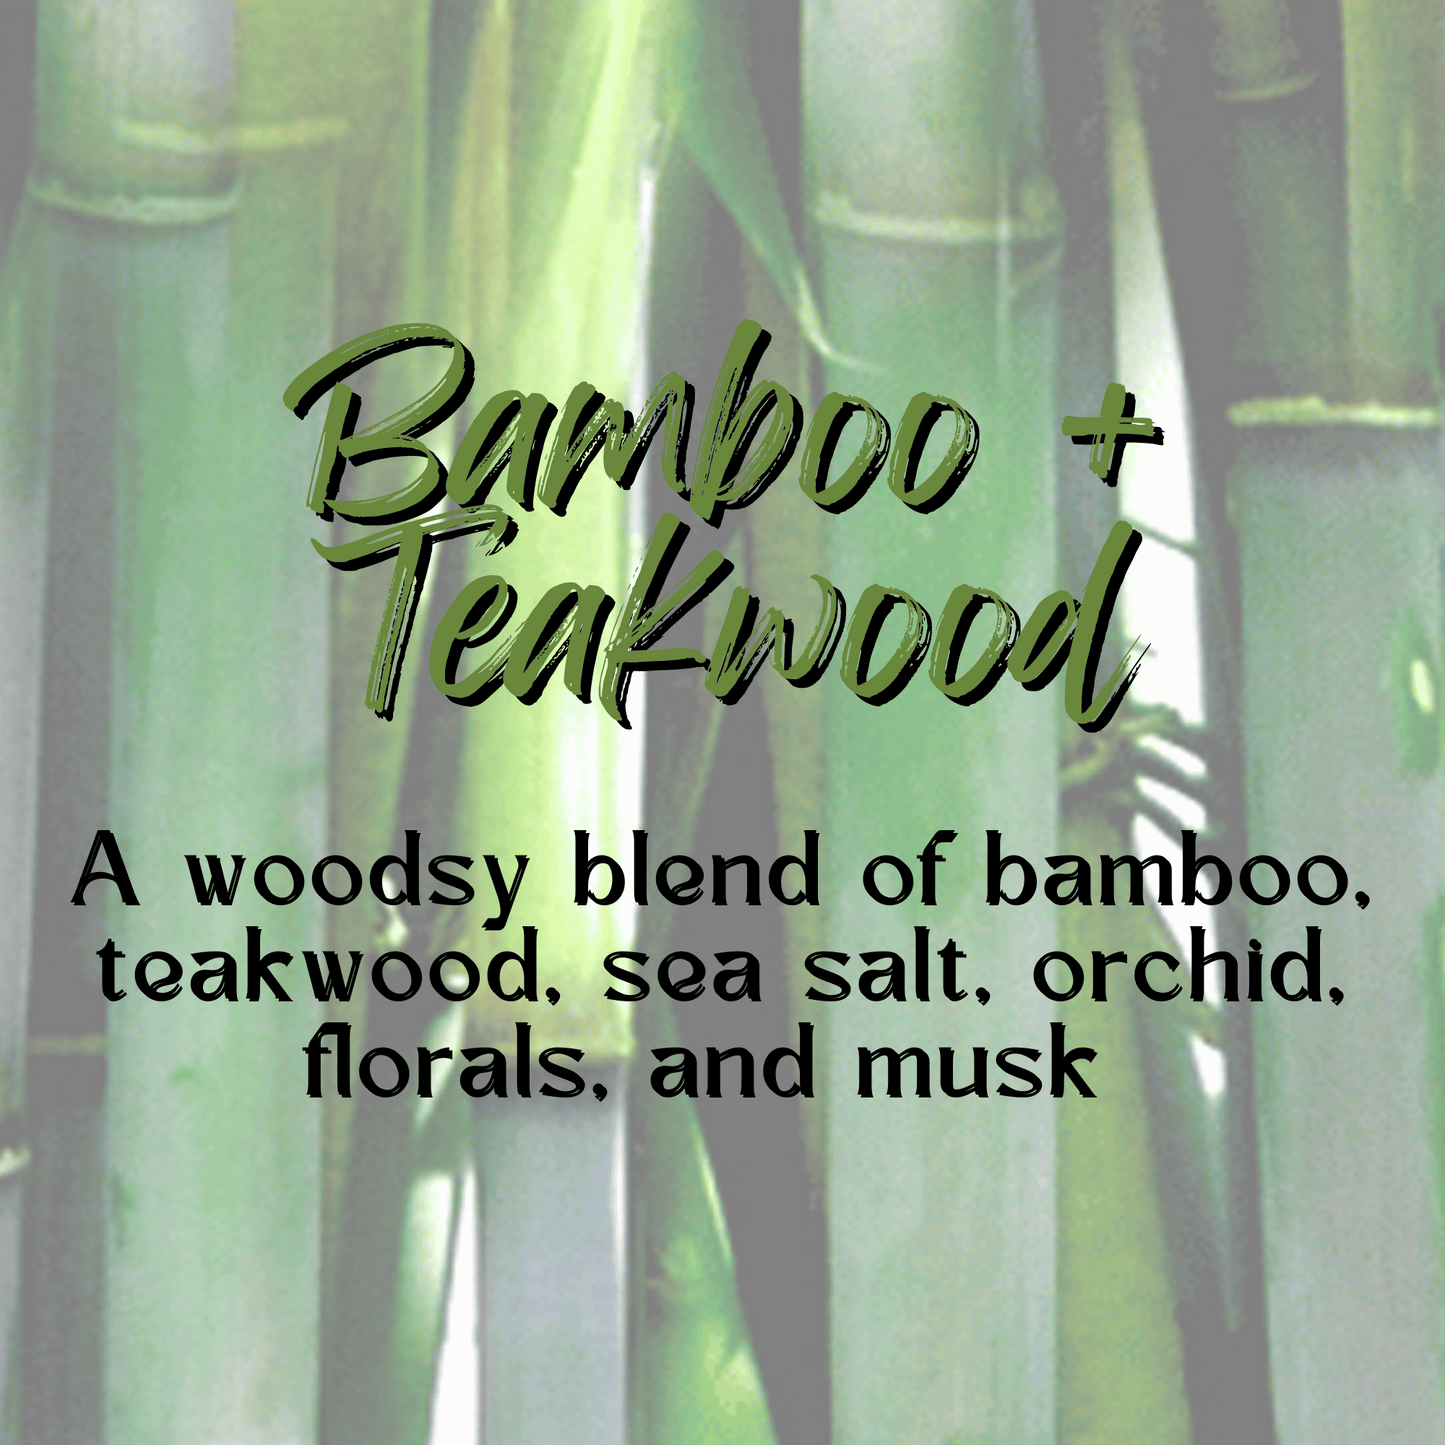 Emulsified Sugar Body Scrub | Bamboo + Teakwood | Choice of Size